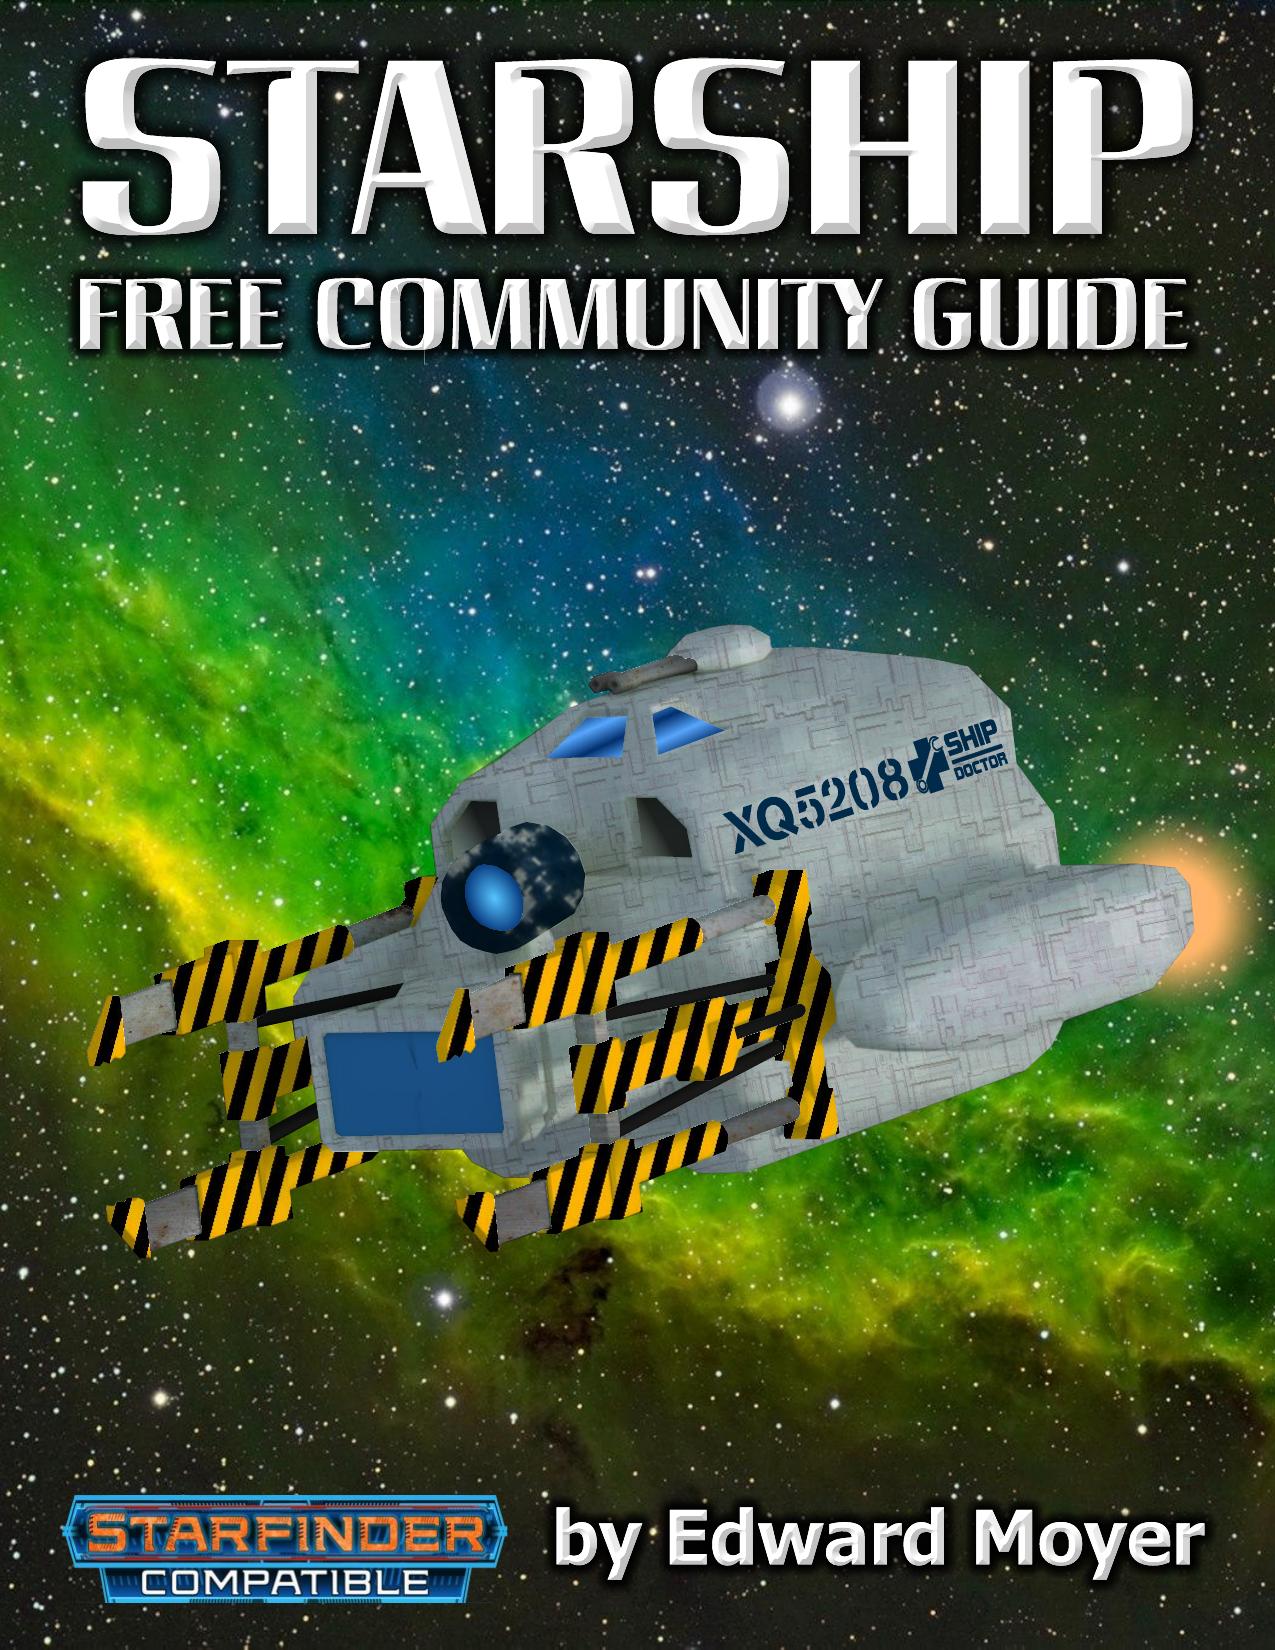 Starship Community Guide